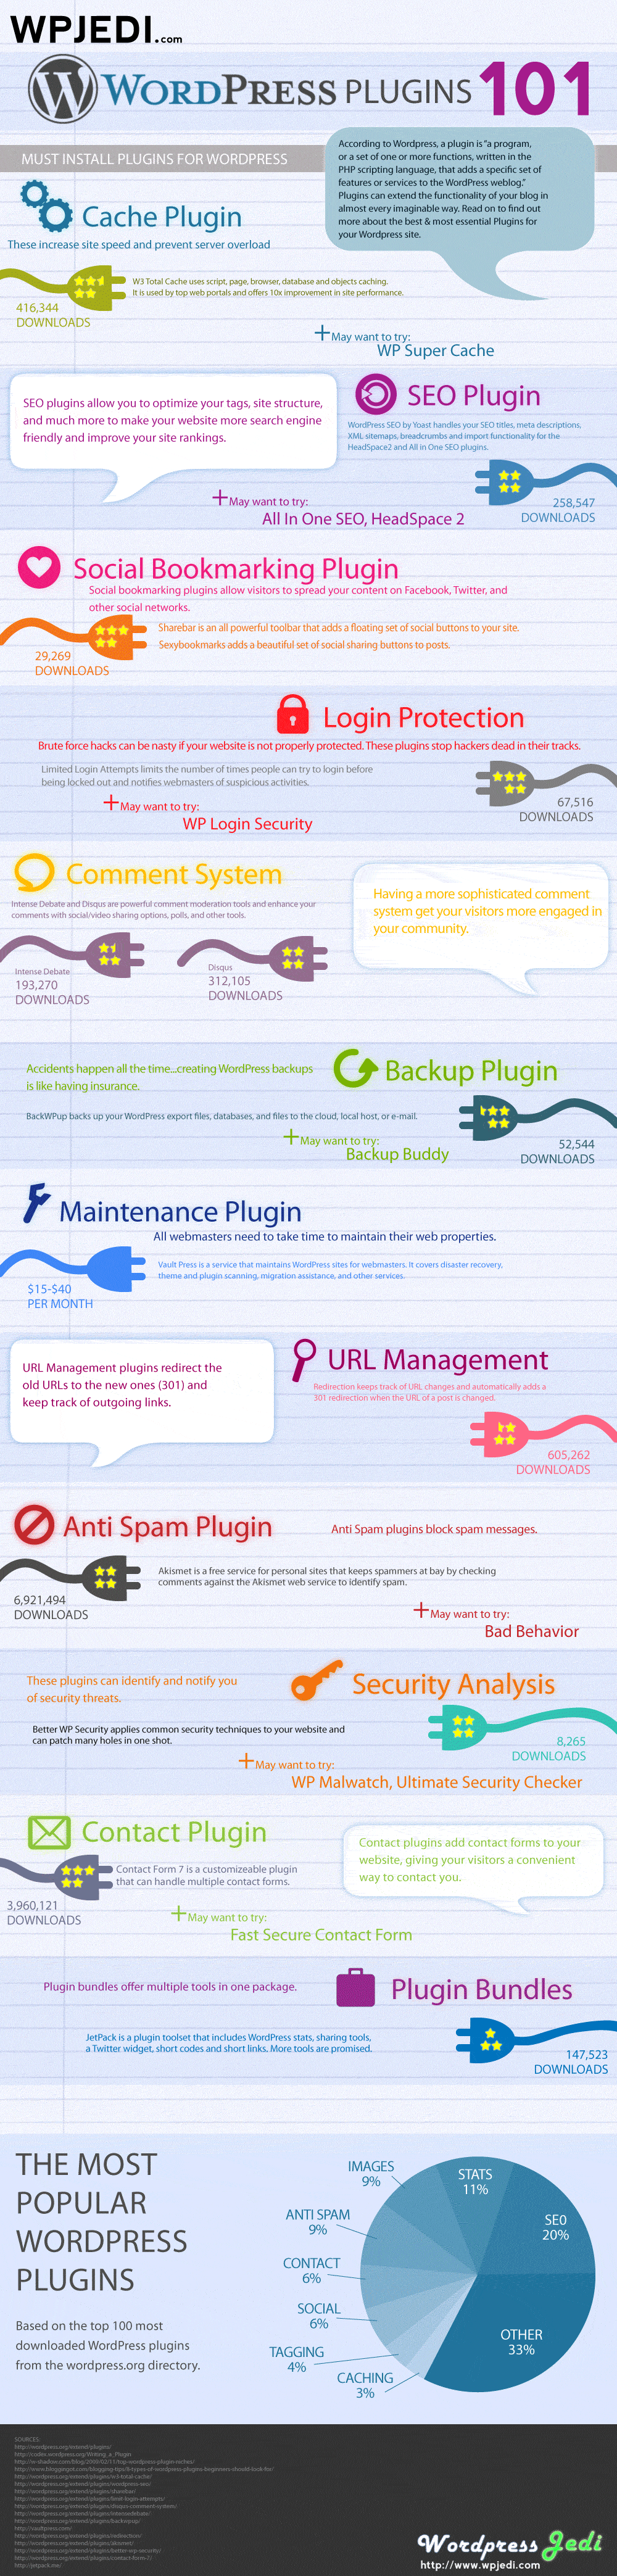 Infographic: Must have WordPress Plugins